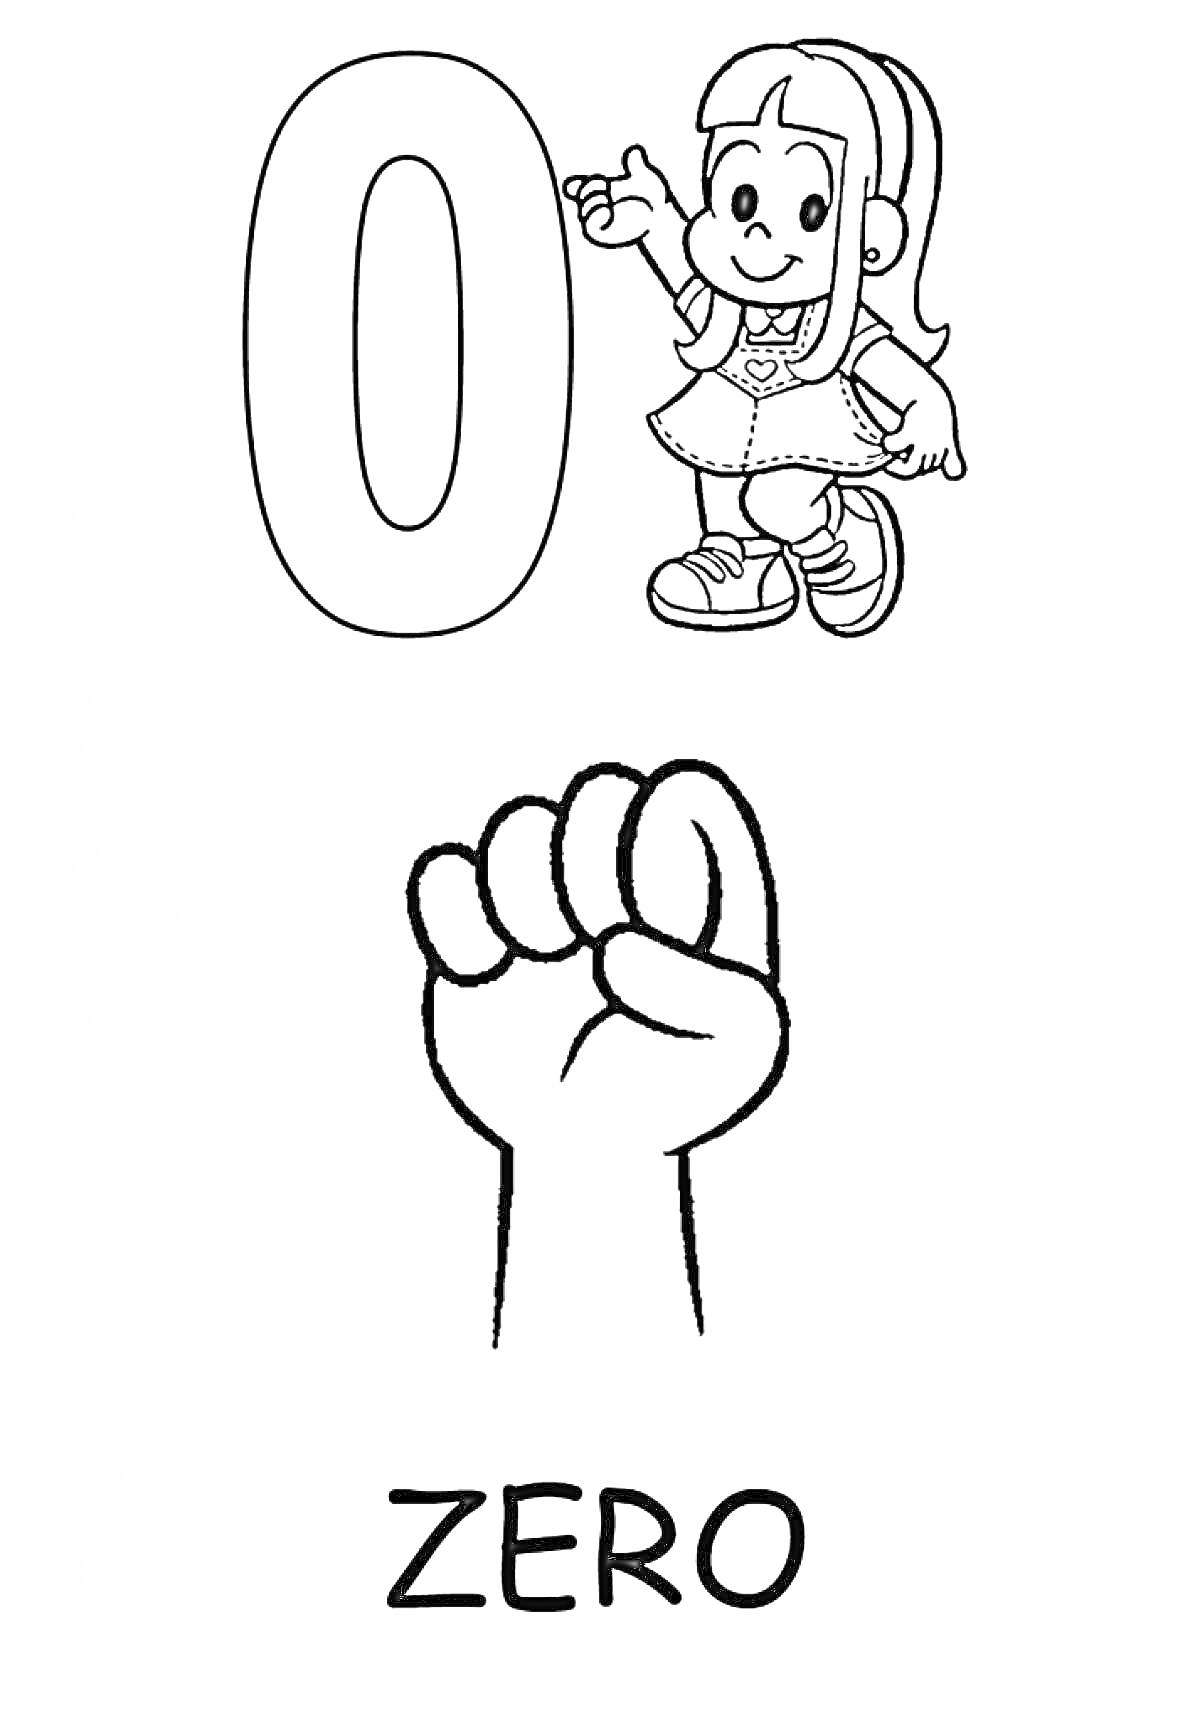 Раскраска Цифра 0, жест рукой для нуля, девочка, надпись 